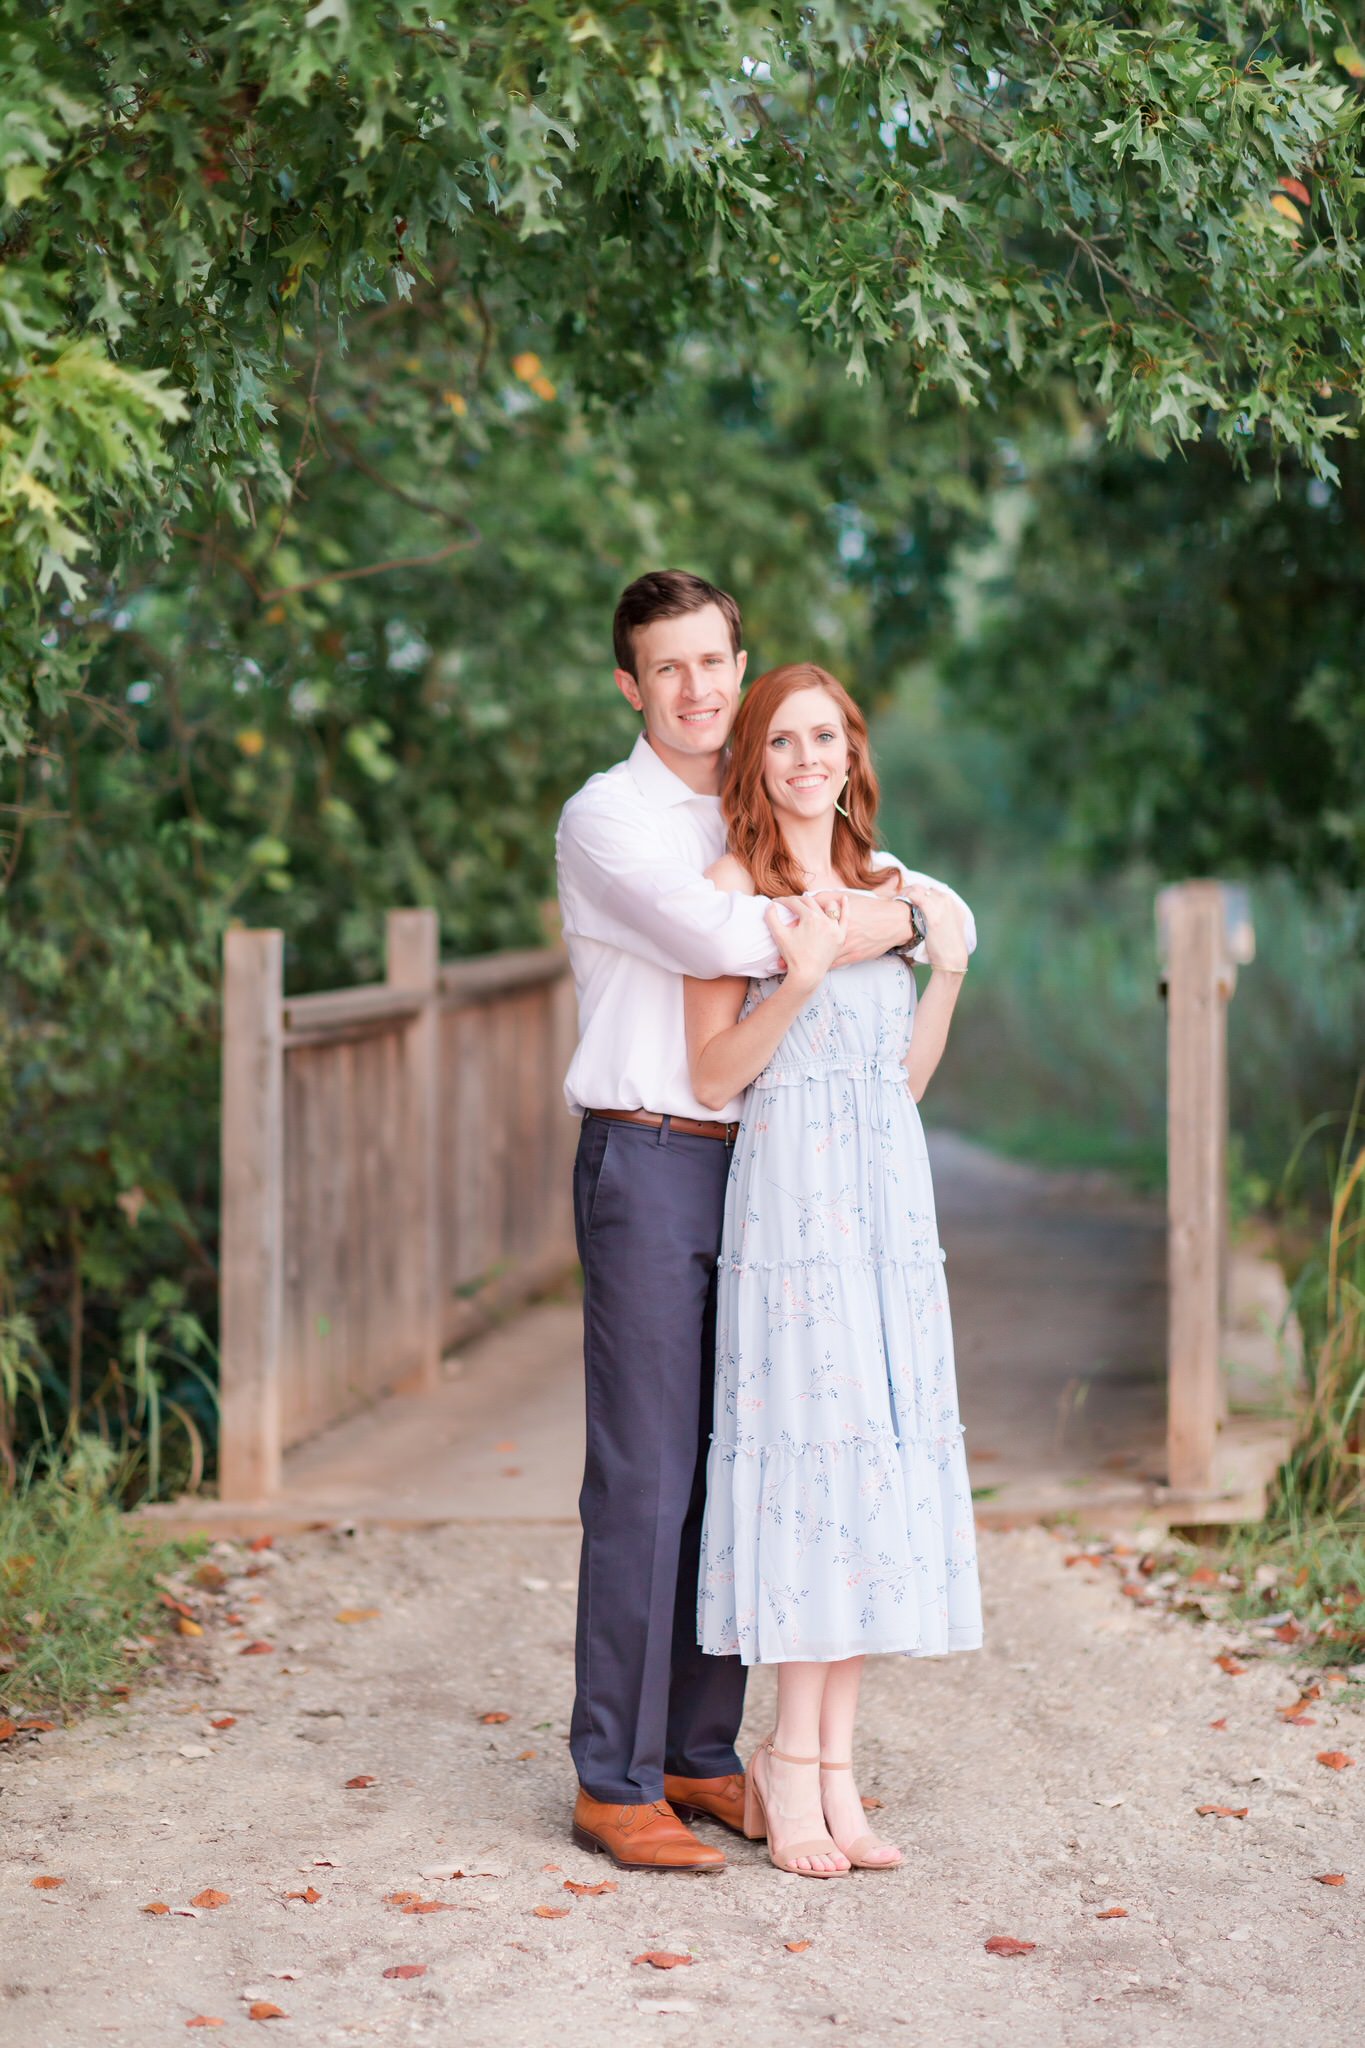 Engagement Session at Cibolo Nature Center in Boerne, TX by Dawn Elizabeth Studios, San Antonio Wedding Photographer